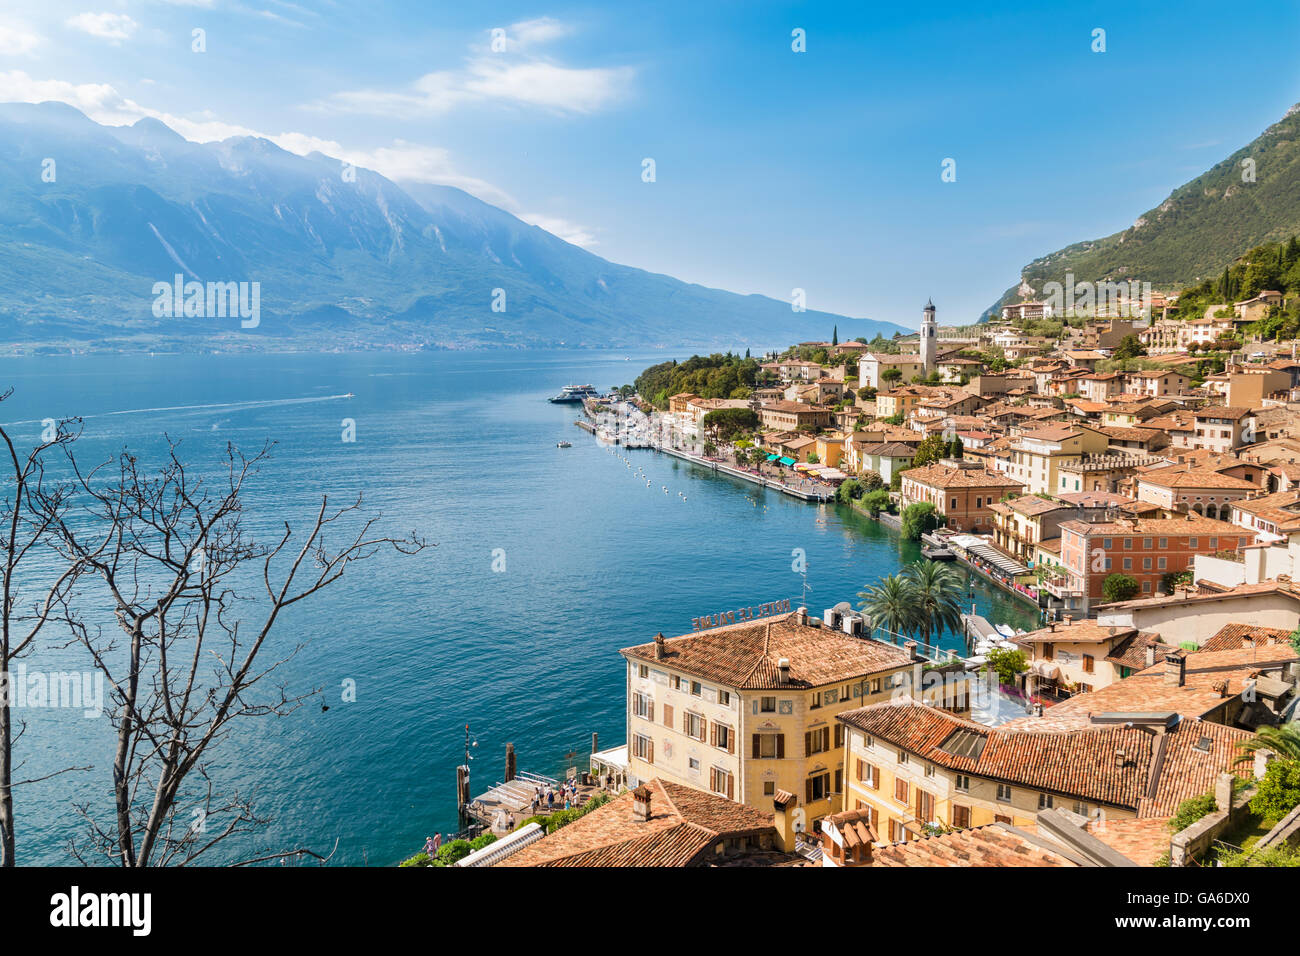 Panorama of Limone sul Garda, a small town on Lake Garda, Italy. Stock Photo